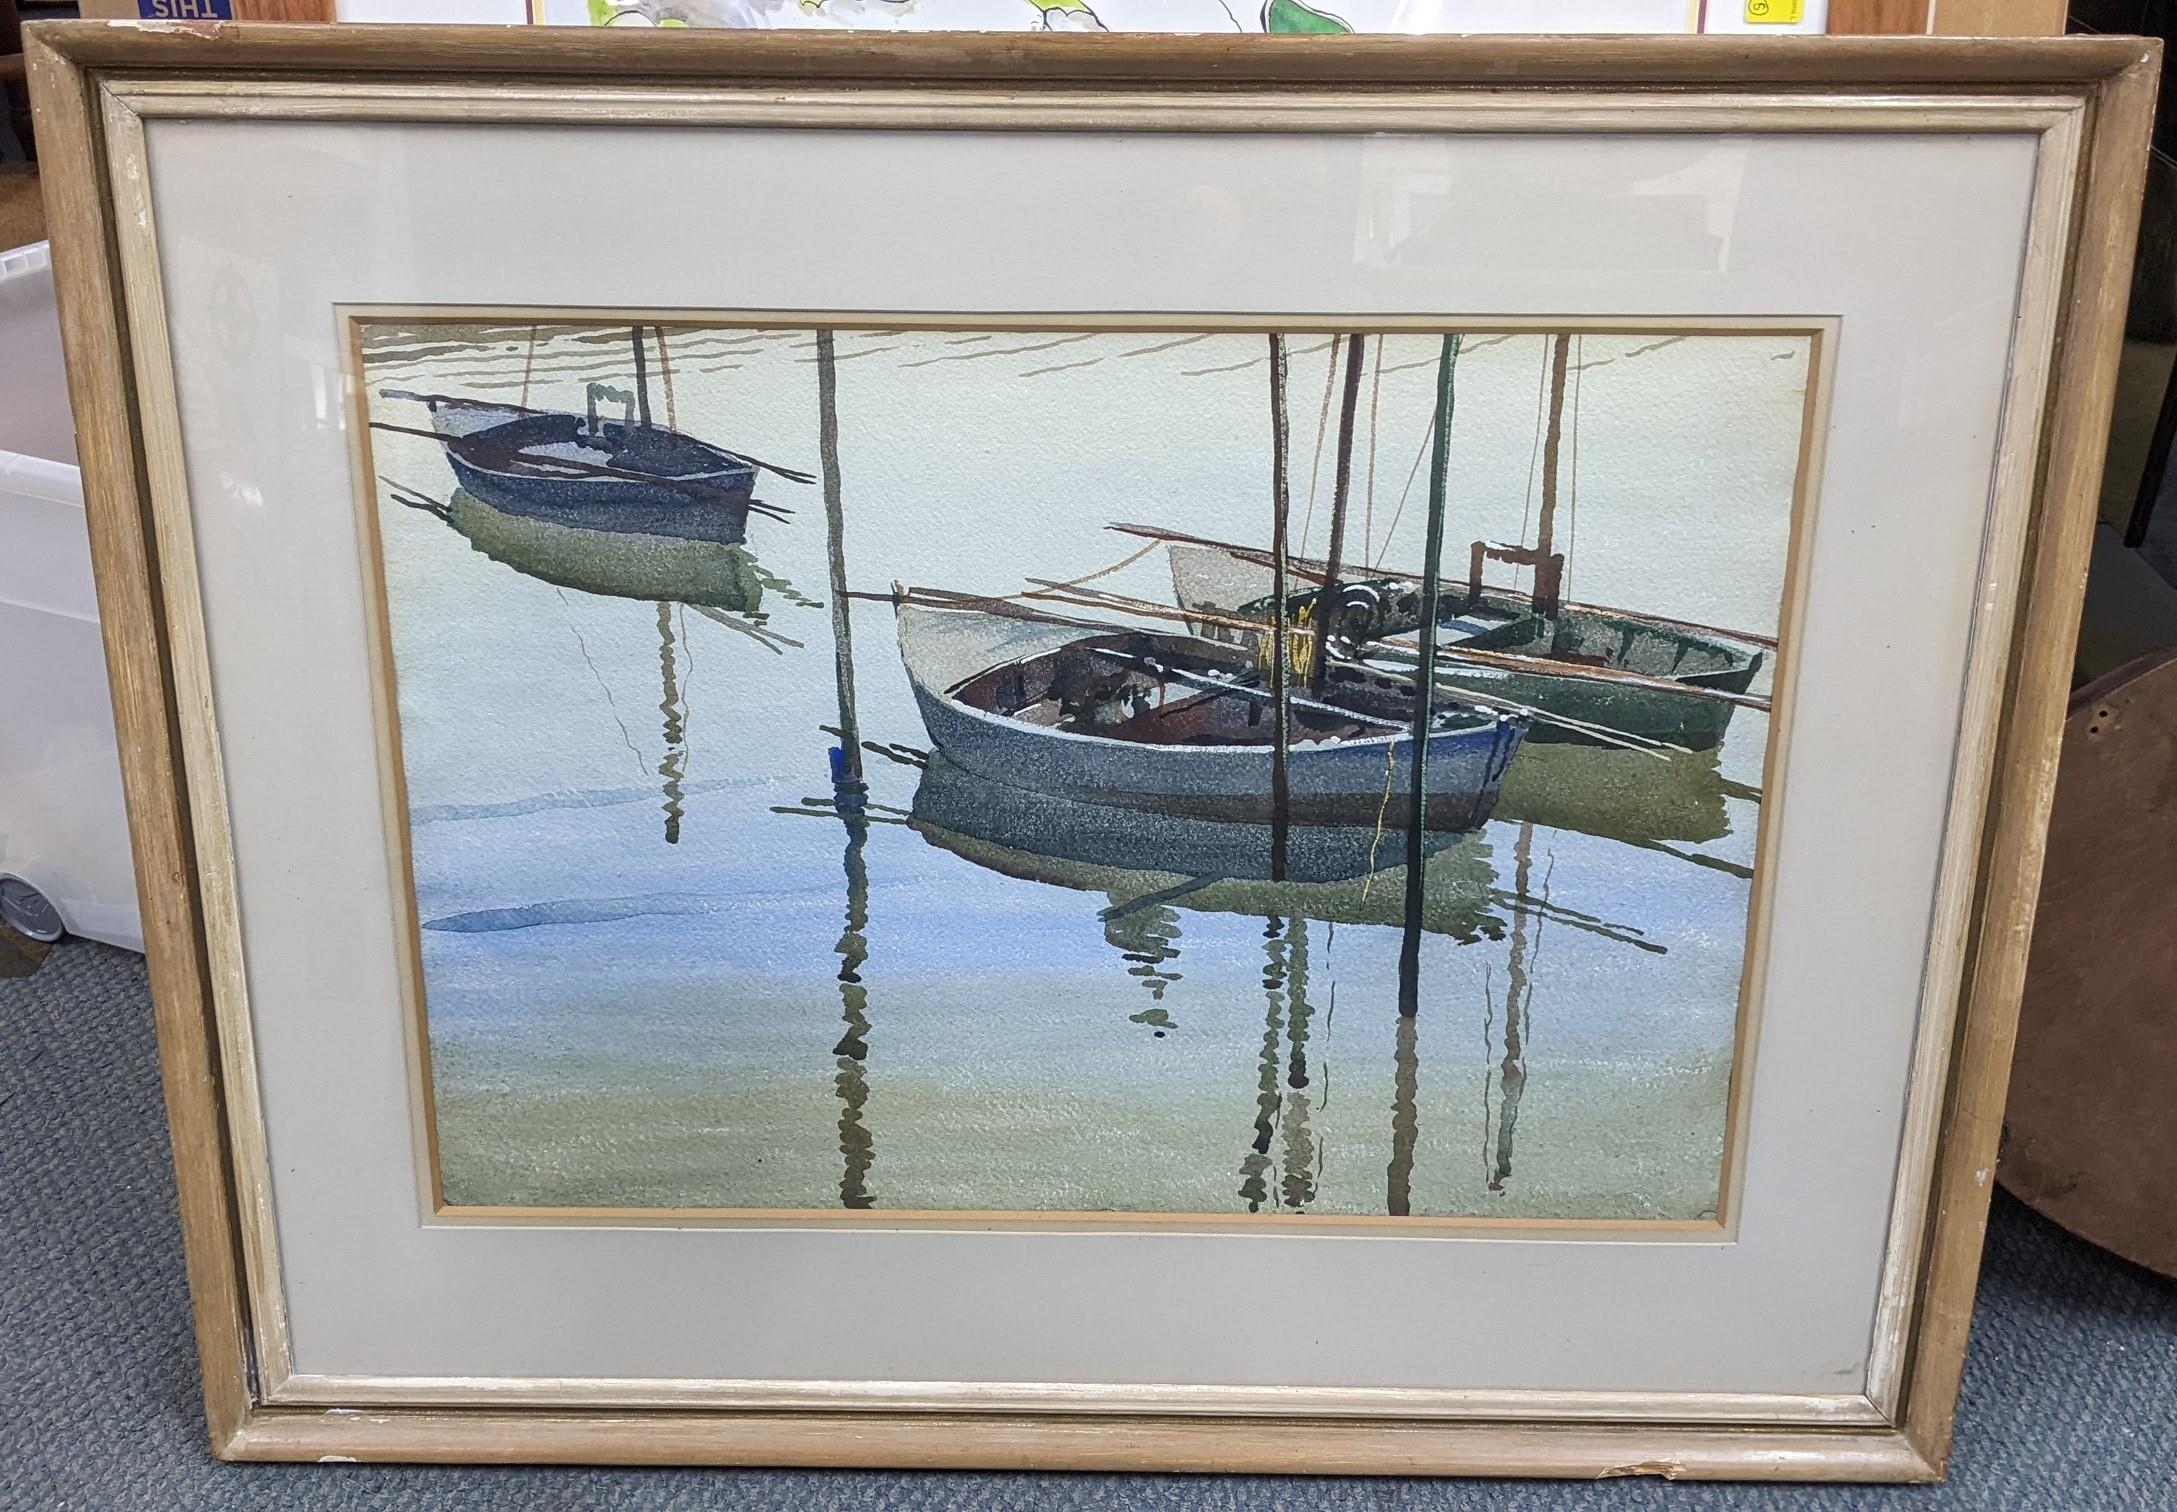 Bernard Parker - a watercolour depicting moored fishing boats, 55.5cm x 38cm framed Location: A1B